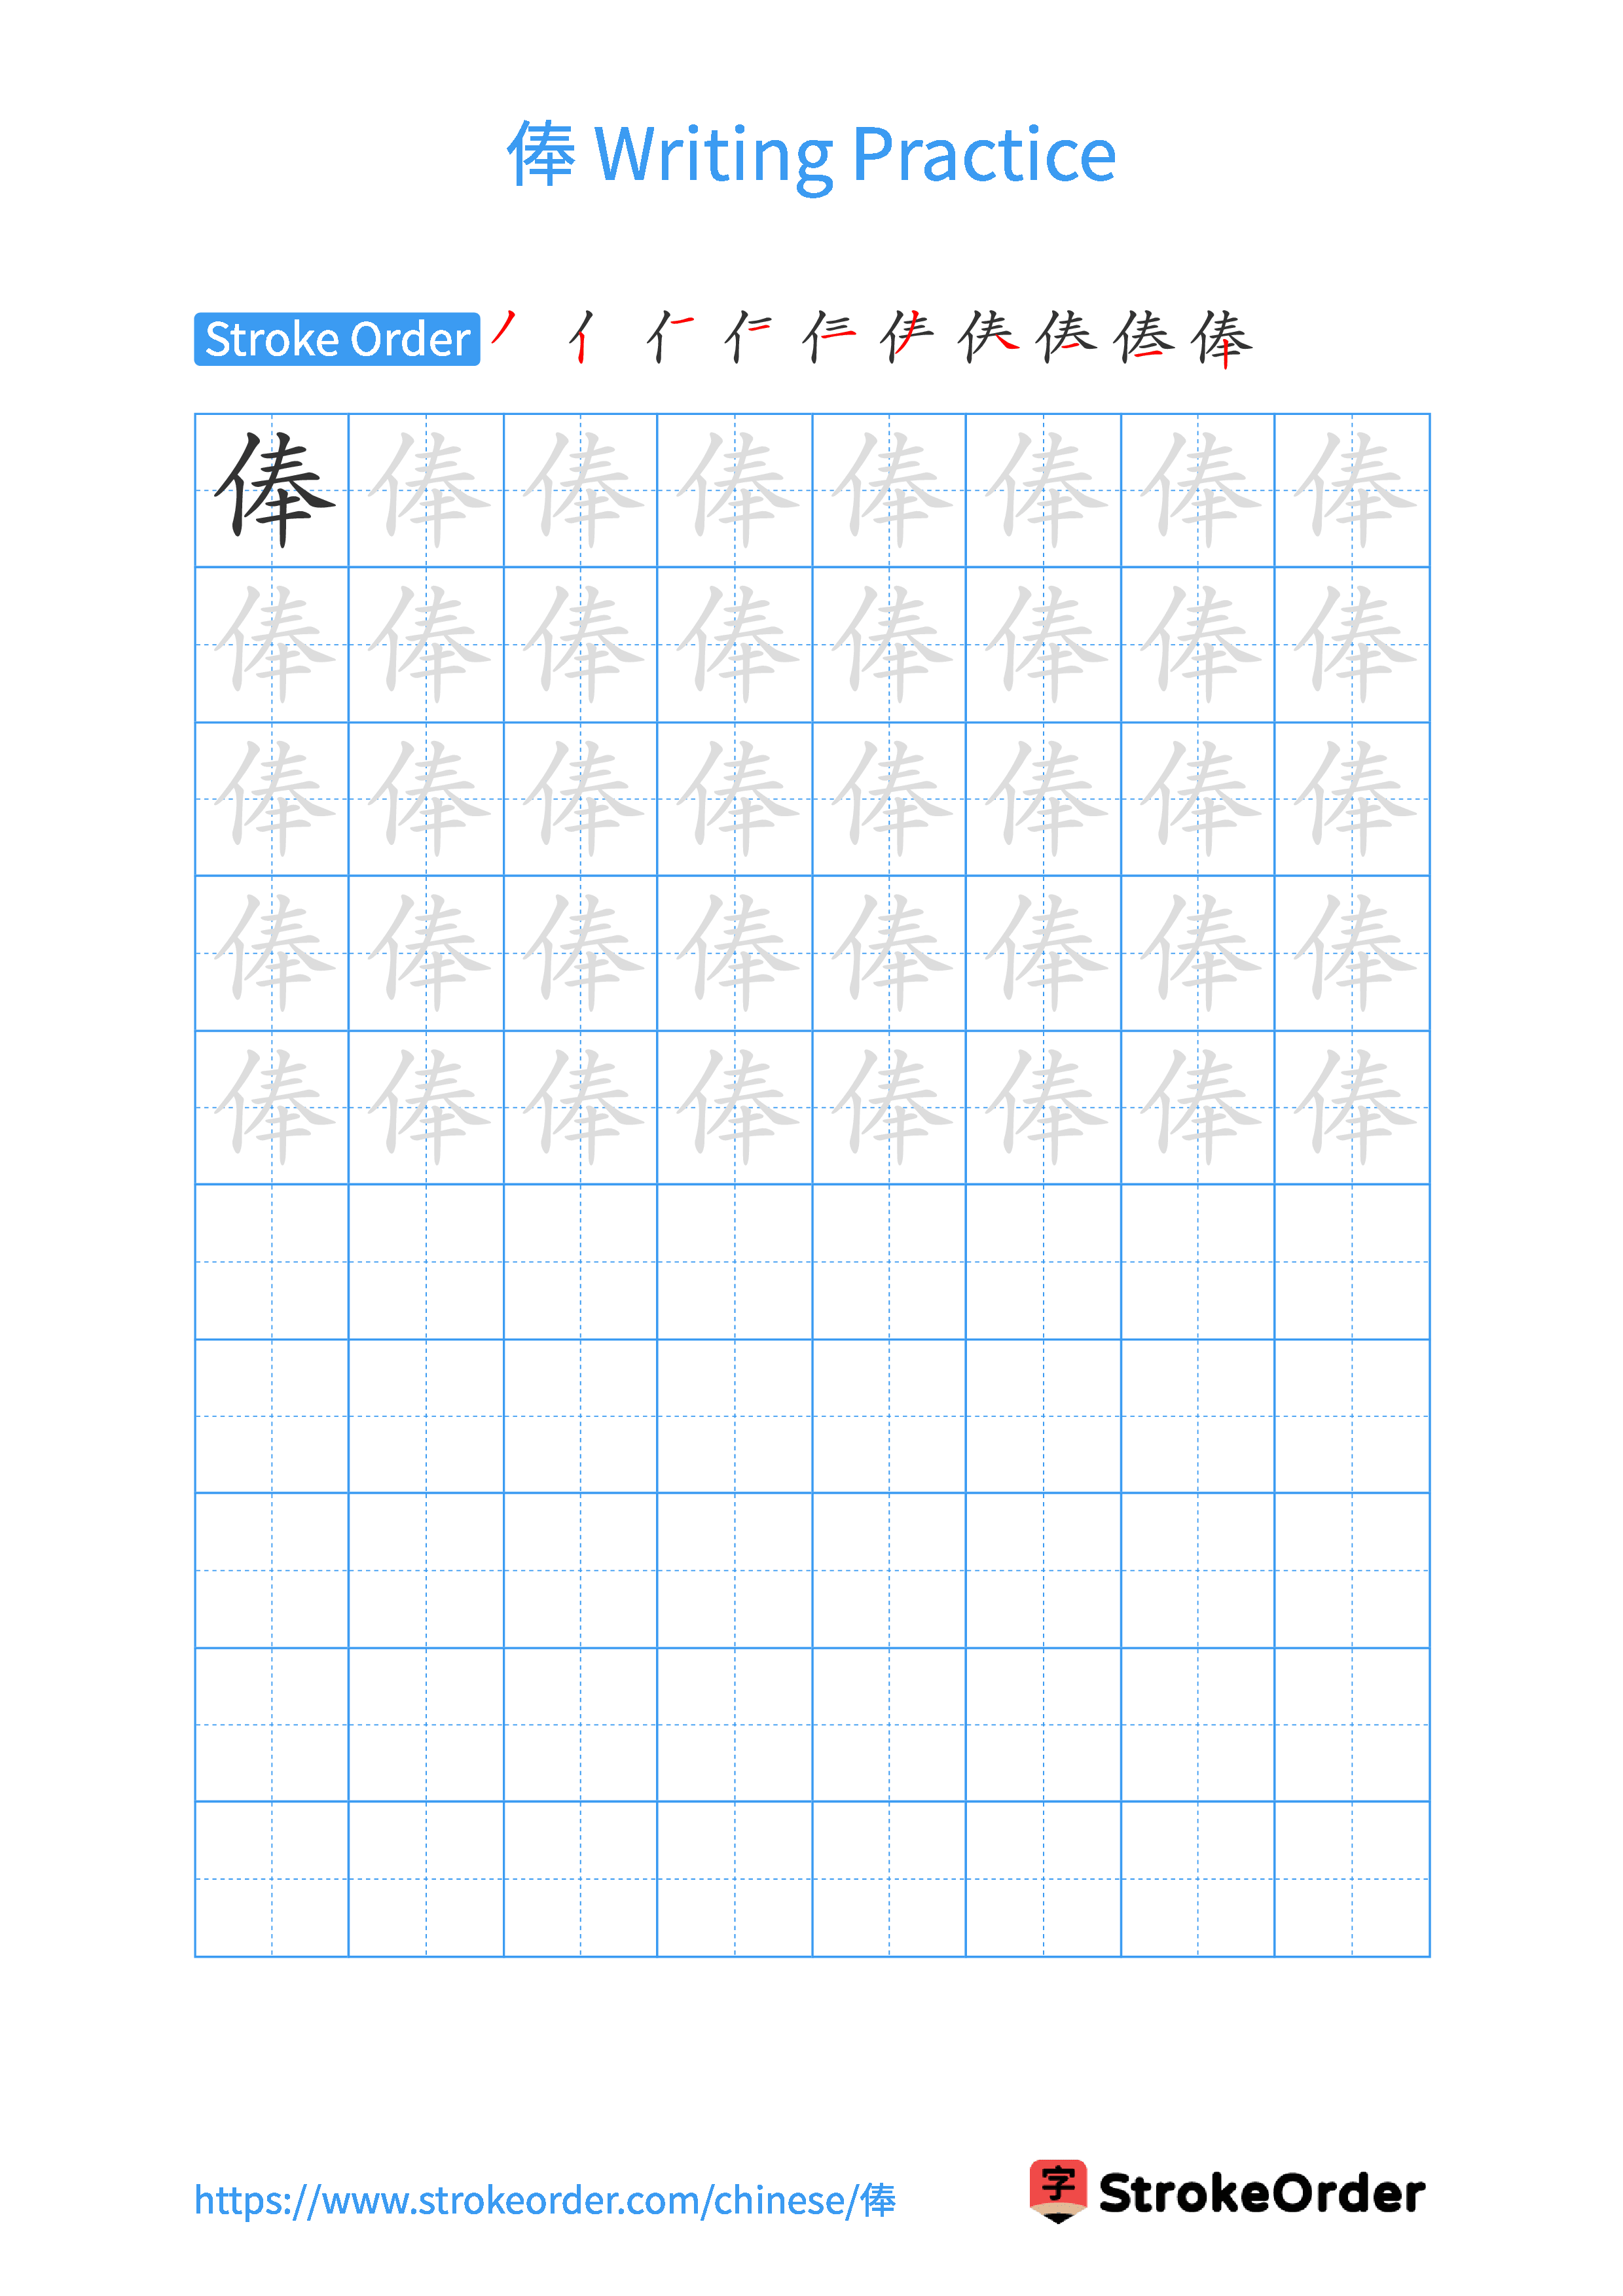 Printable Handwriting Practice Worksheet of the Chinese character 俸 in Portrait Orientation (Tian Zi Ge)